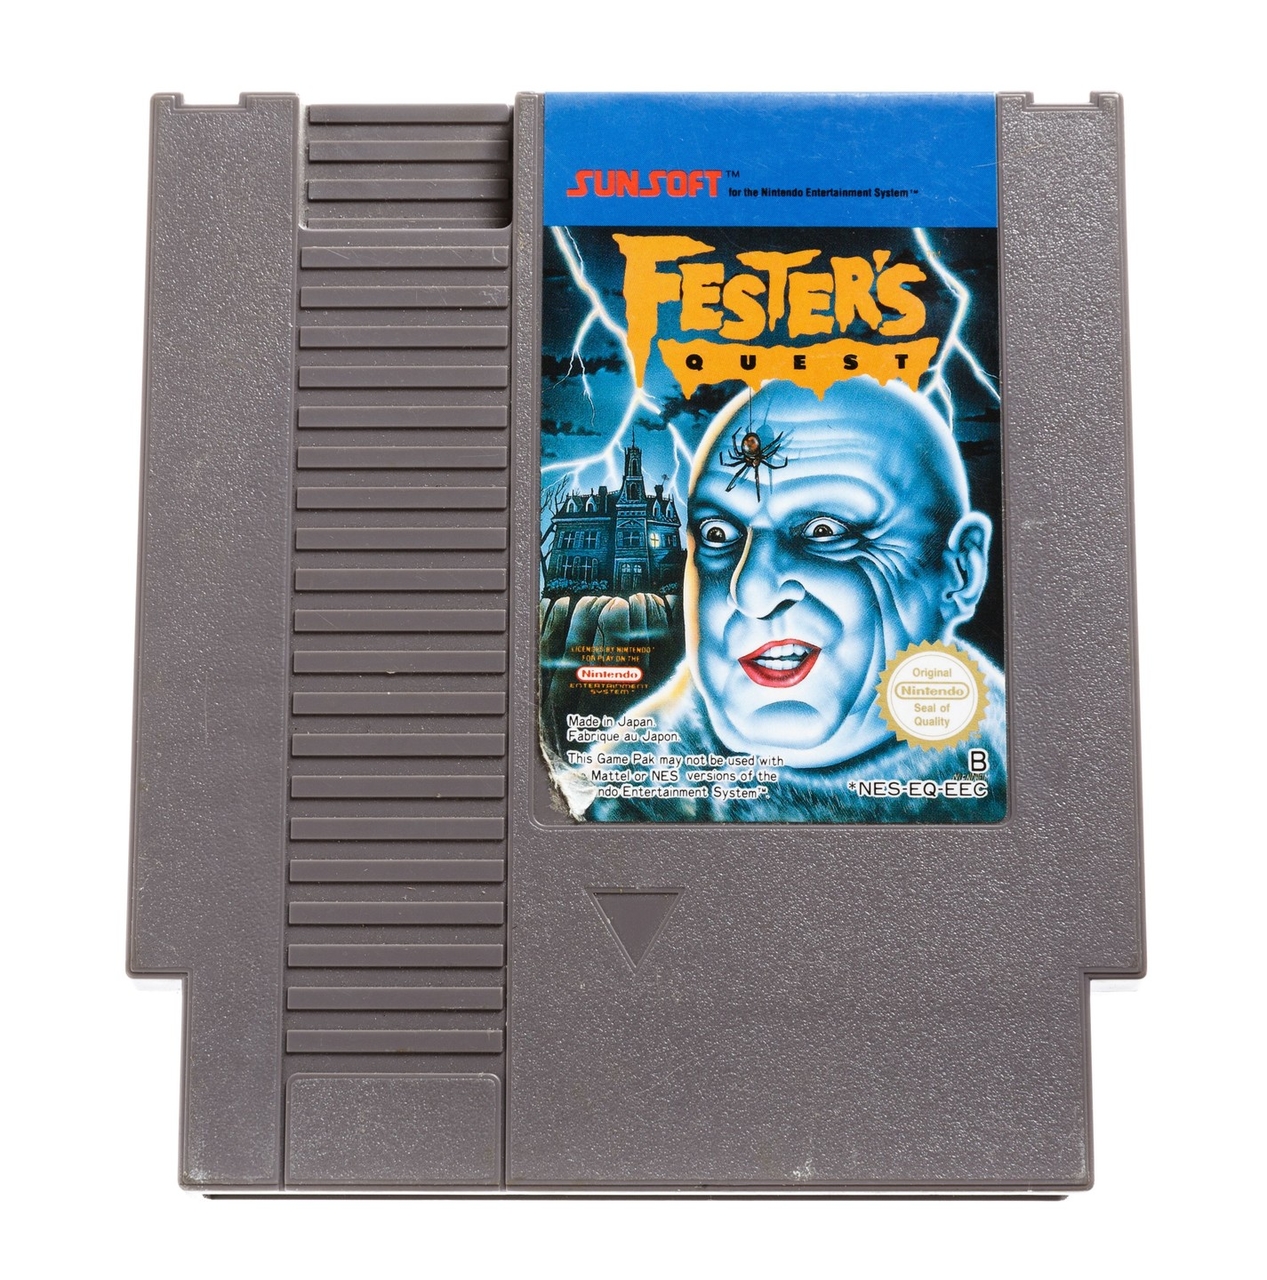 Fester's Quest - Nintendo NES Games